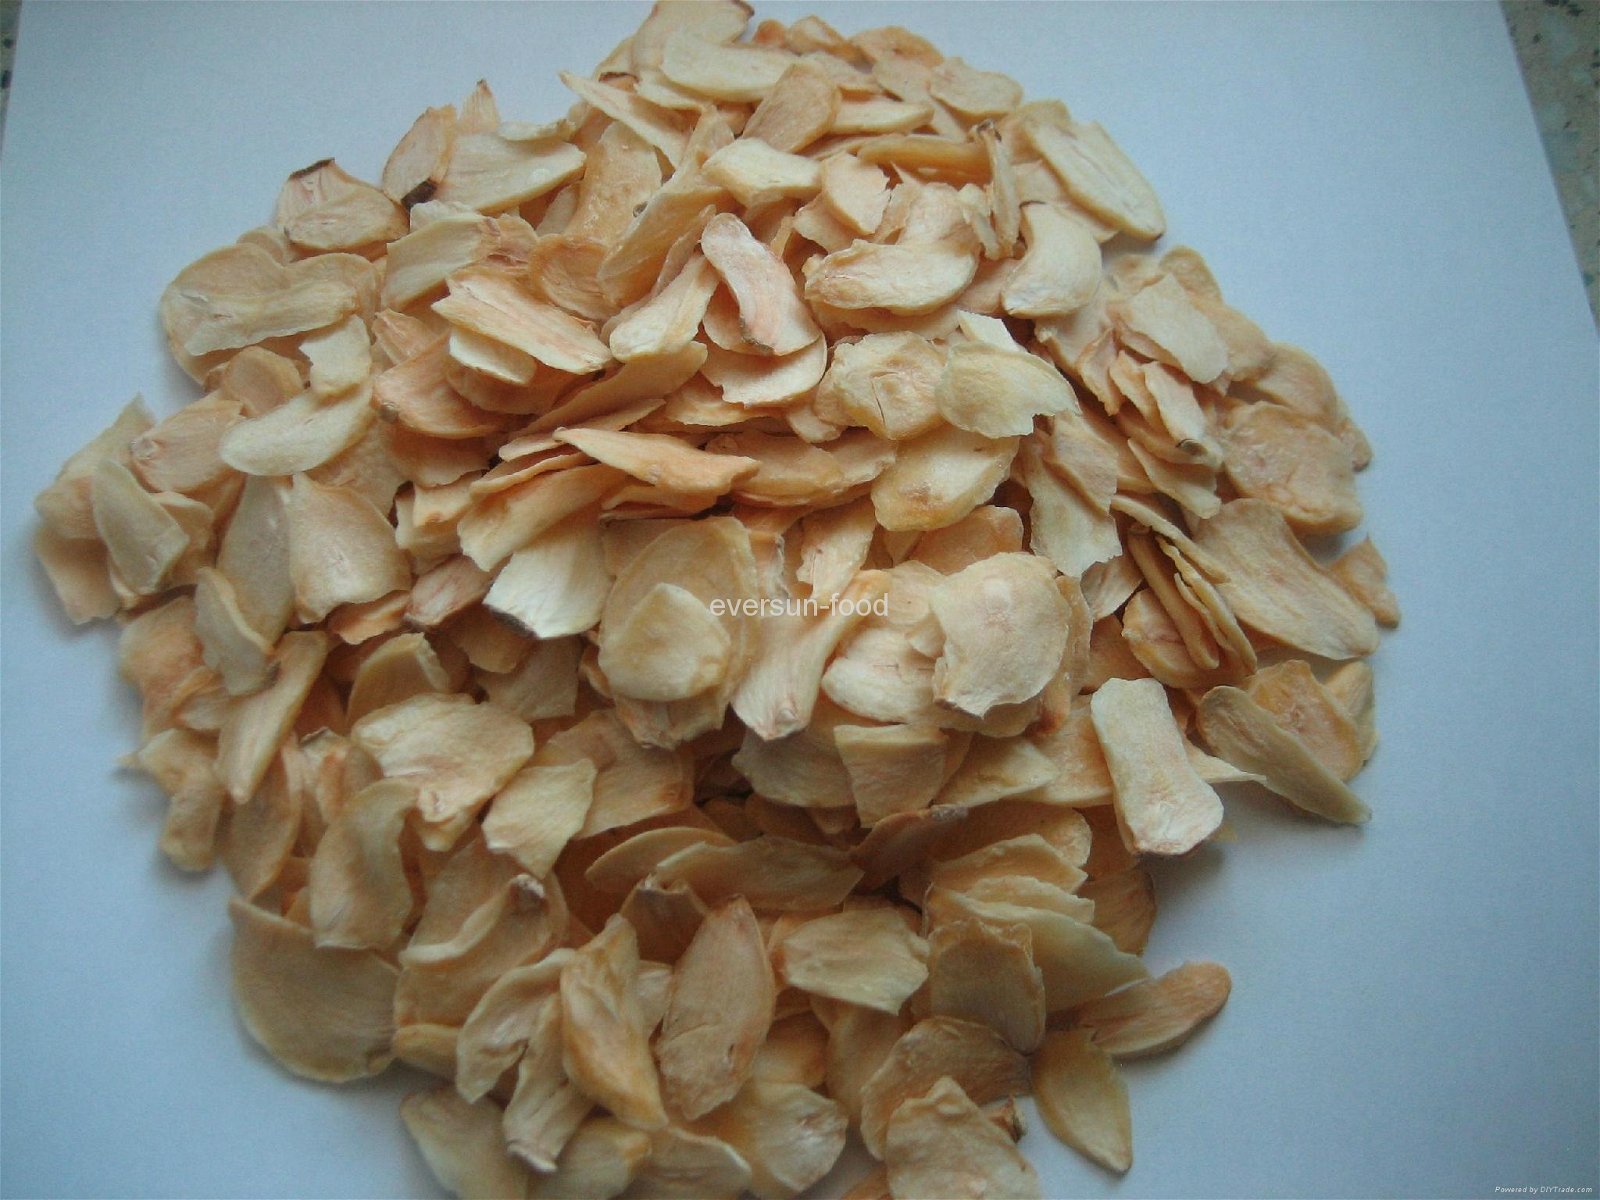 Dehydrated garlic flakes 2